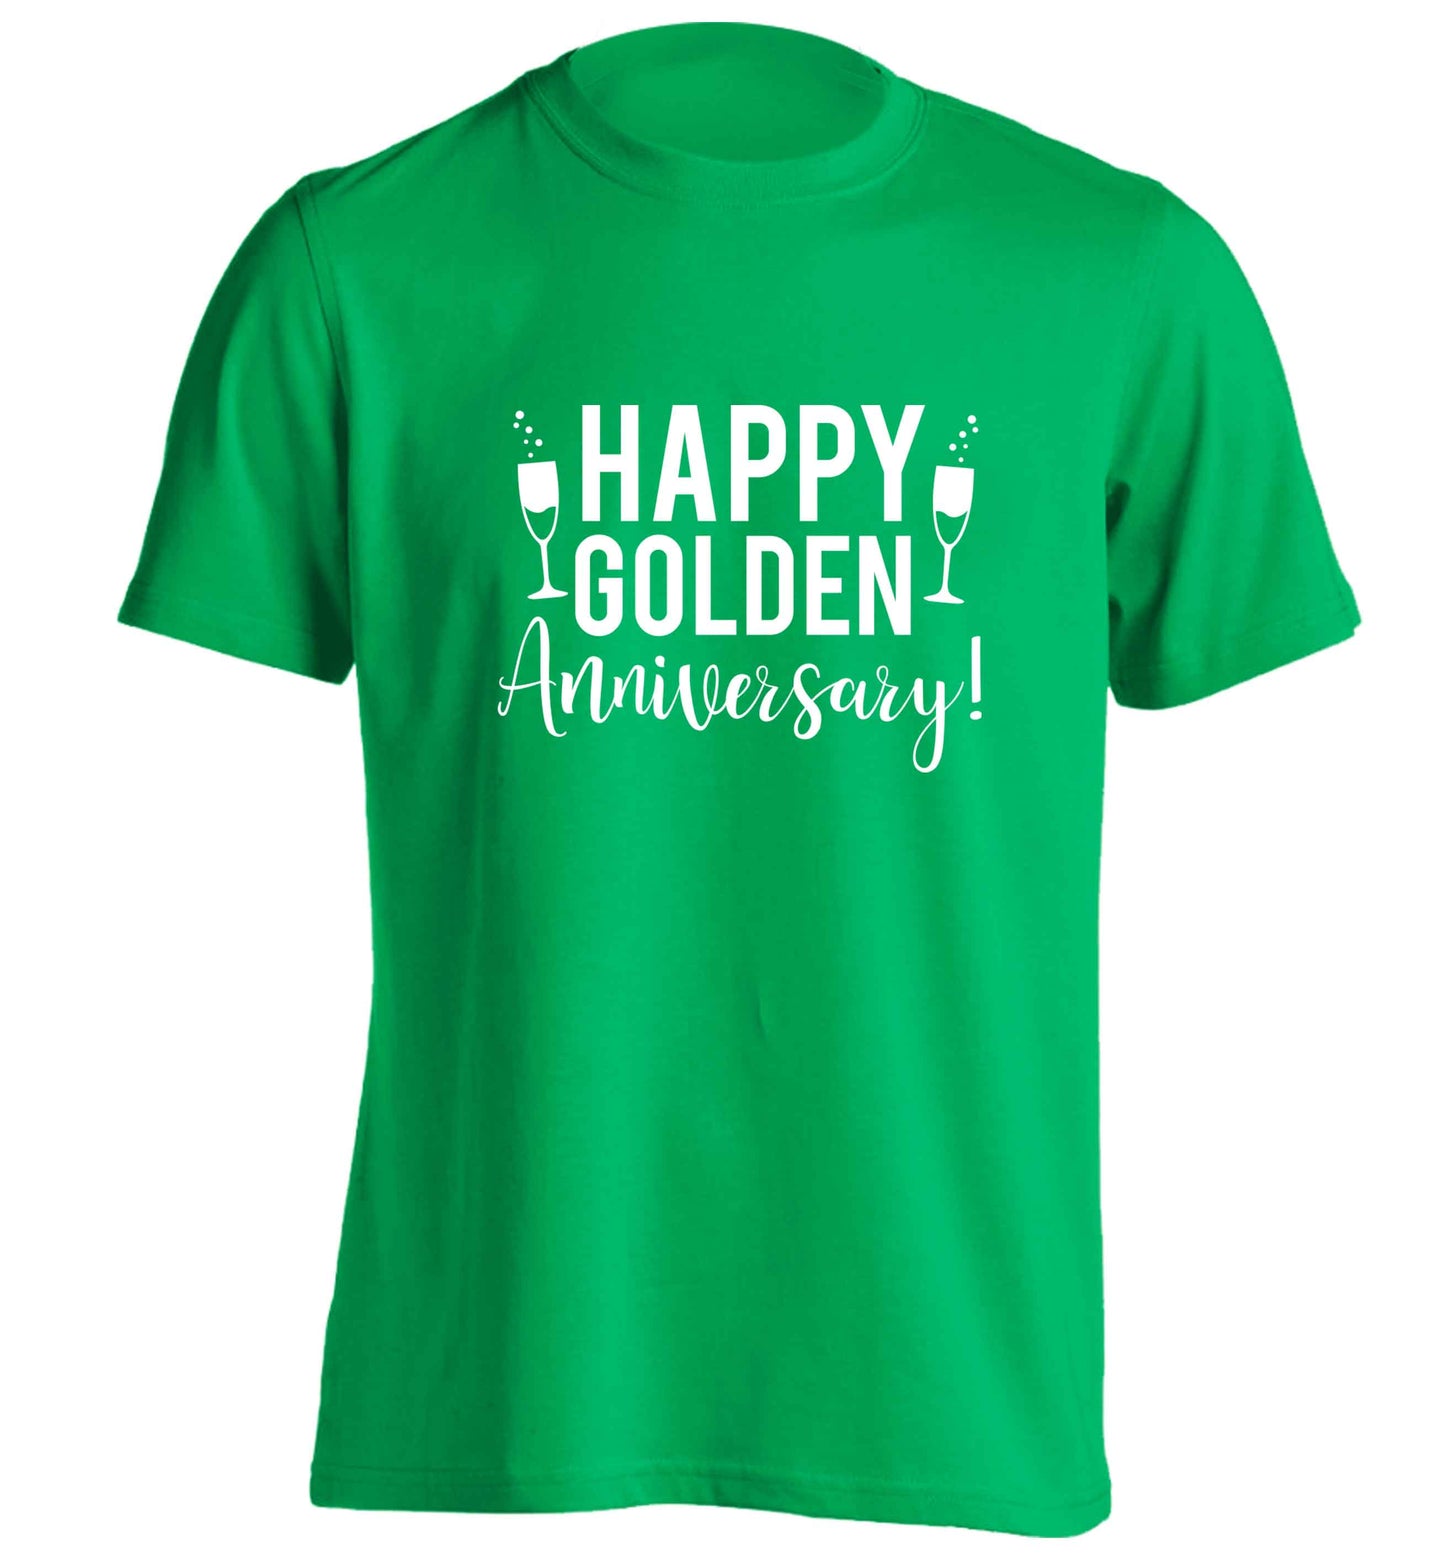 Happy golden anniversary! adults unisex green Tshirt 2XL